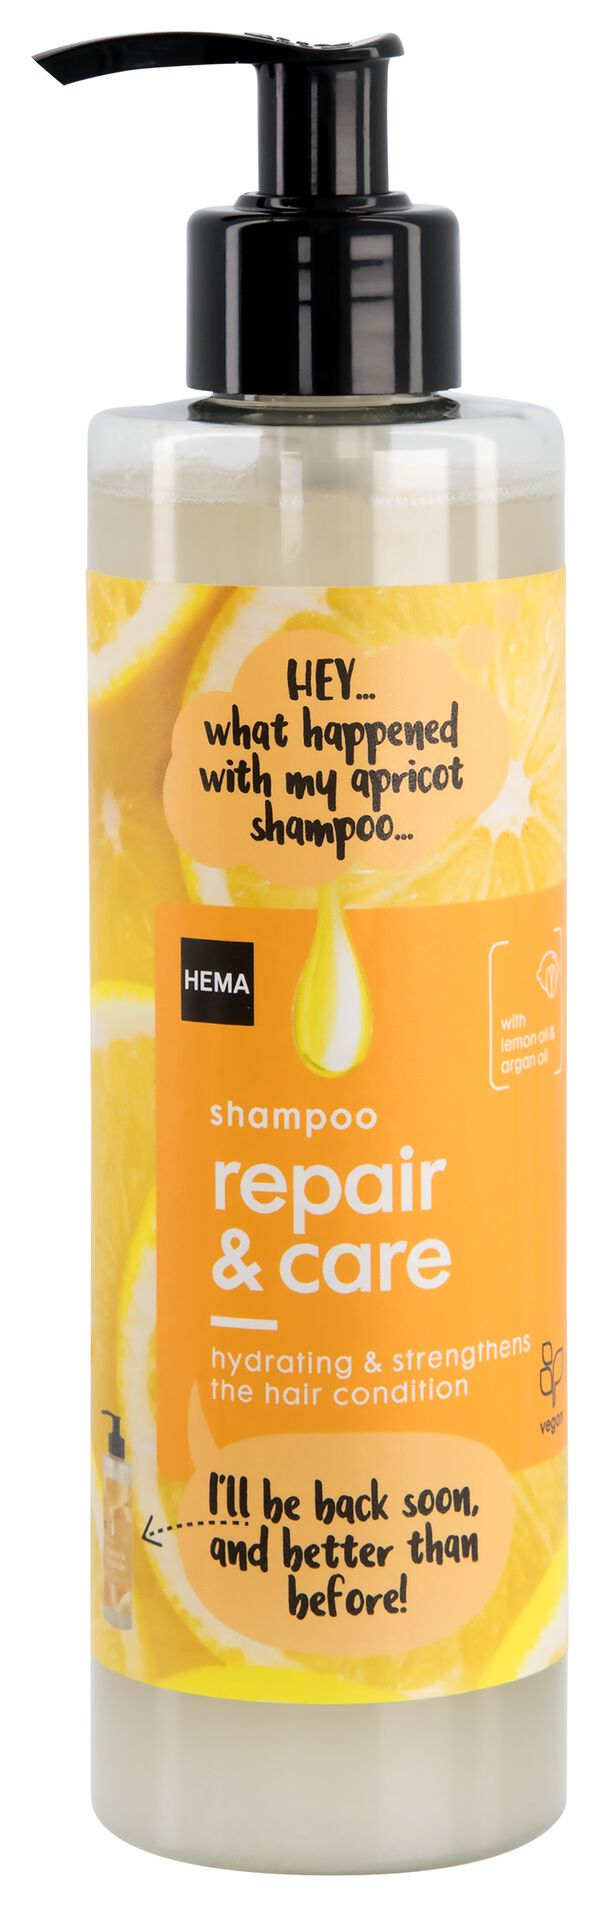 Shampoo, Repair & Care, 300 ml - 11087100 - HEMA